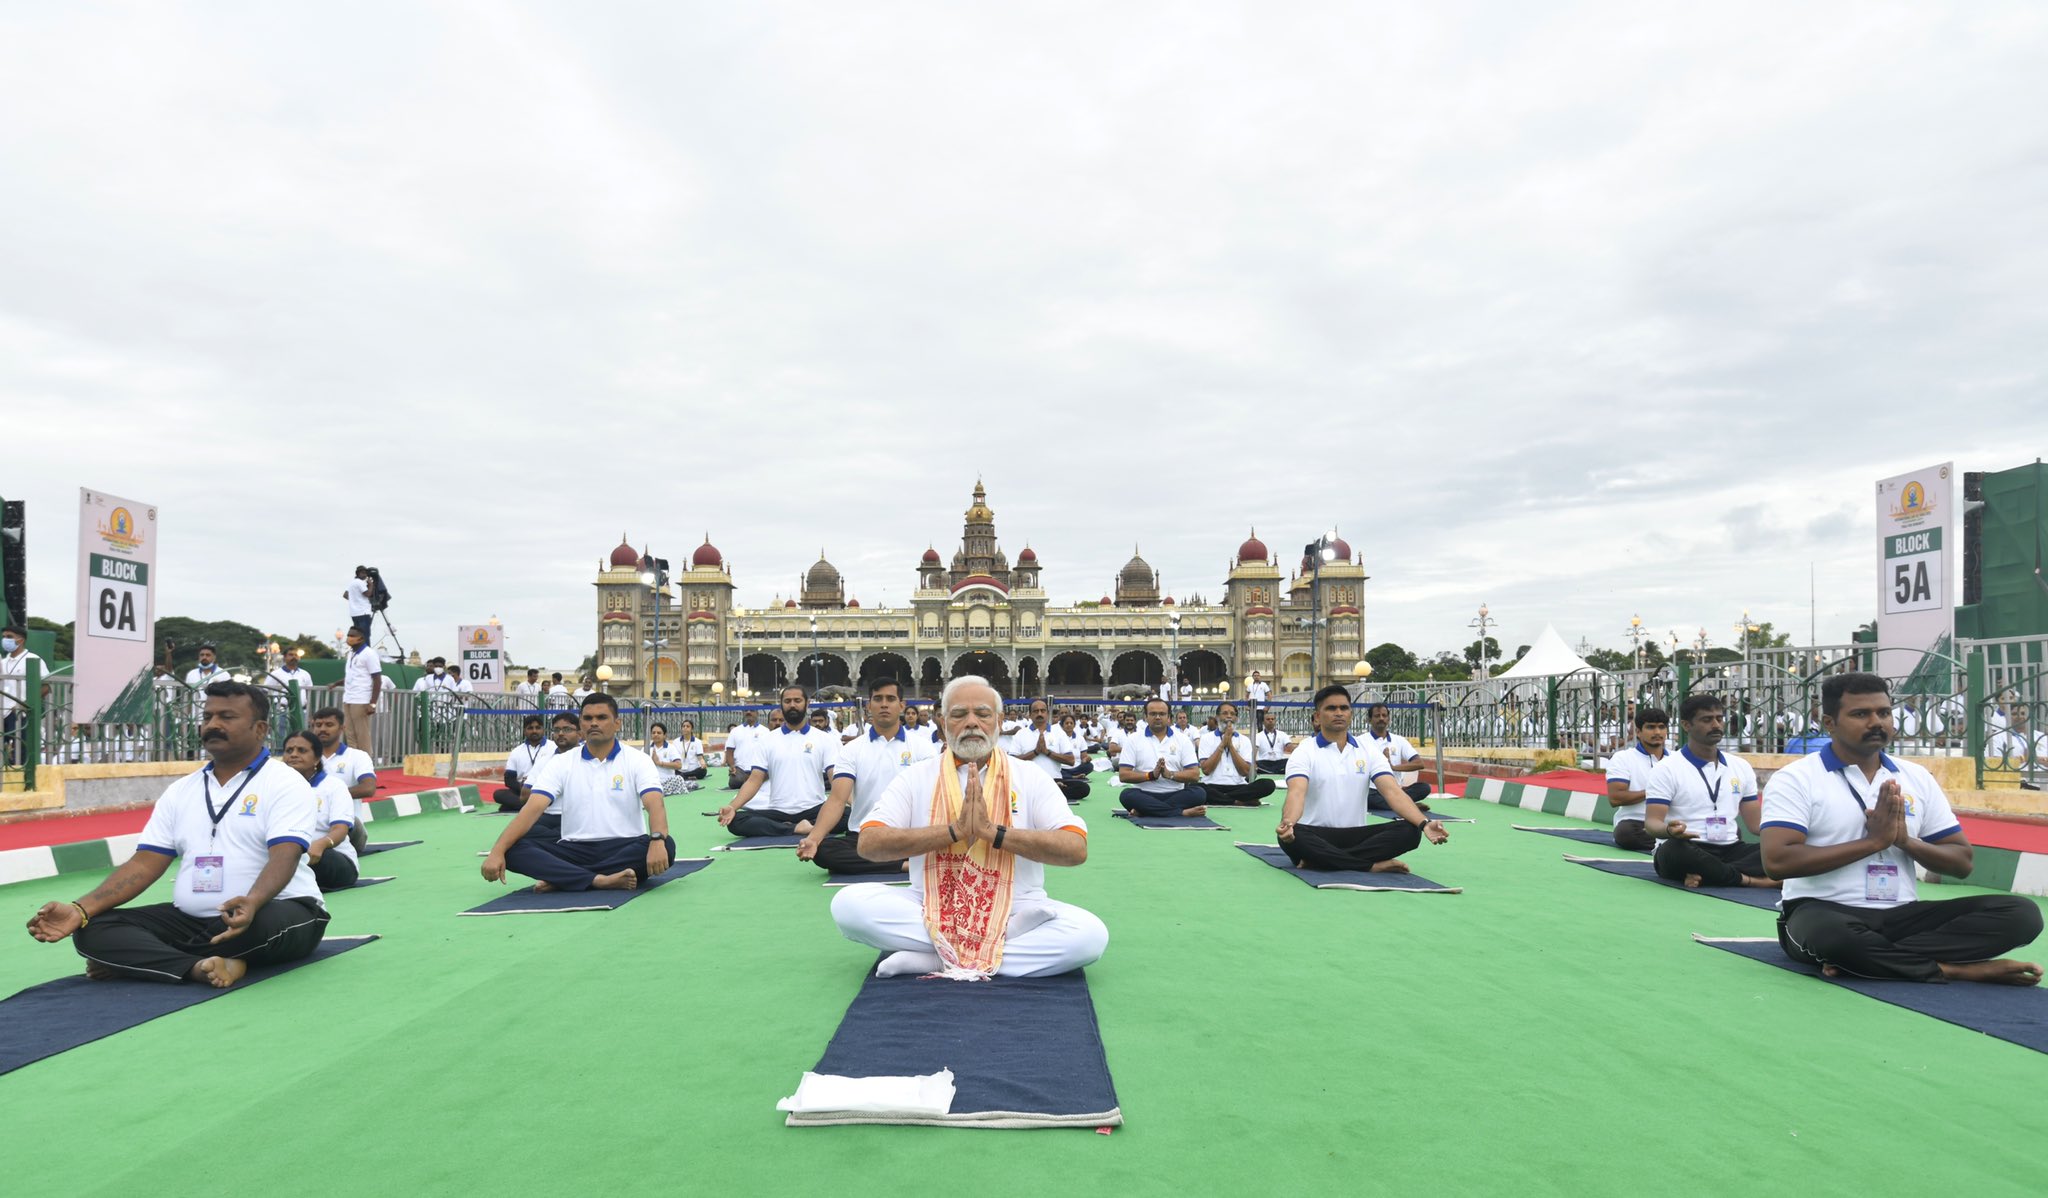 Yoga brings peace to our universe, says PM Modi